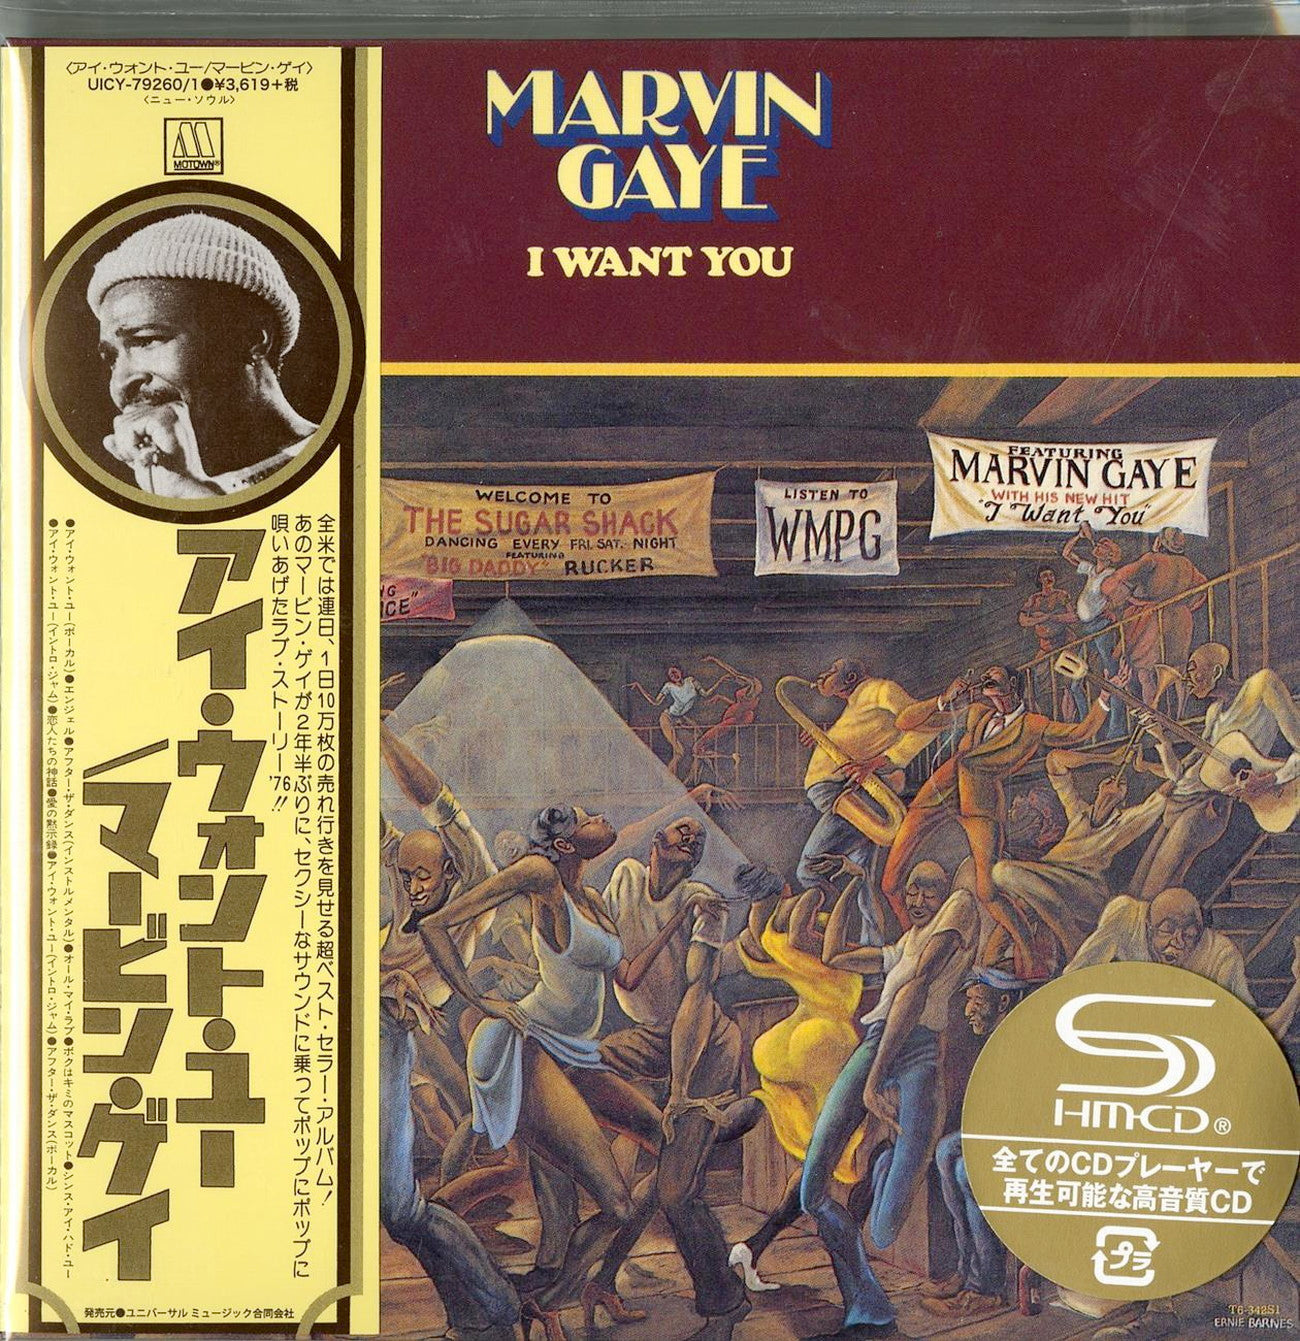 Marvin Gaye - I Want You - Japan  2 Mini LP SHM-CD Bonus Track Limited Edition